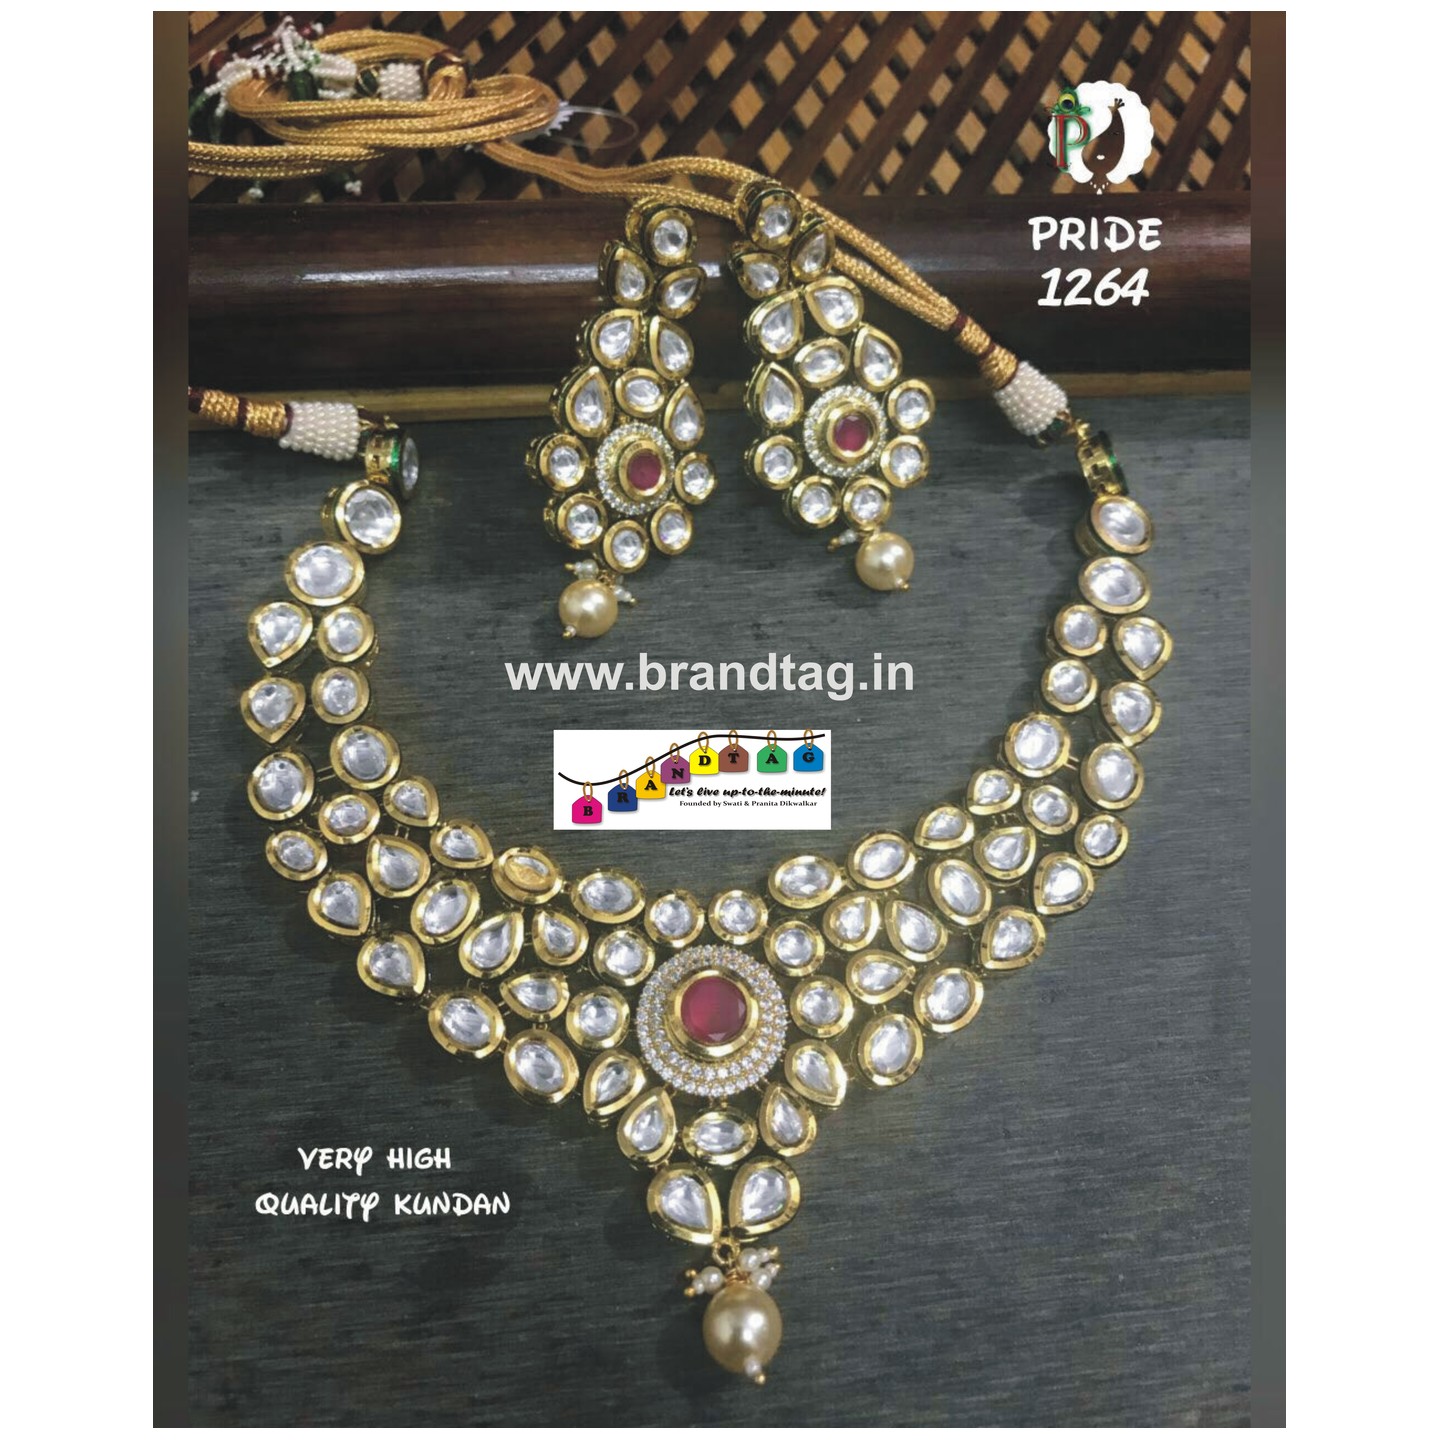 Exquisite Kundan Necklace Set!